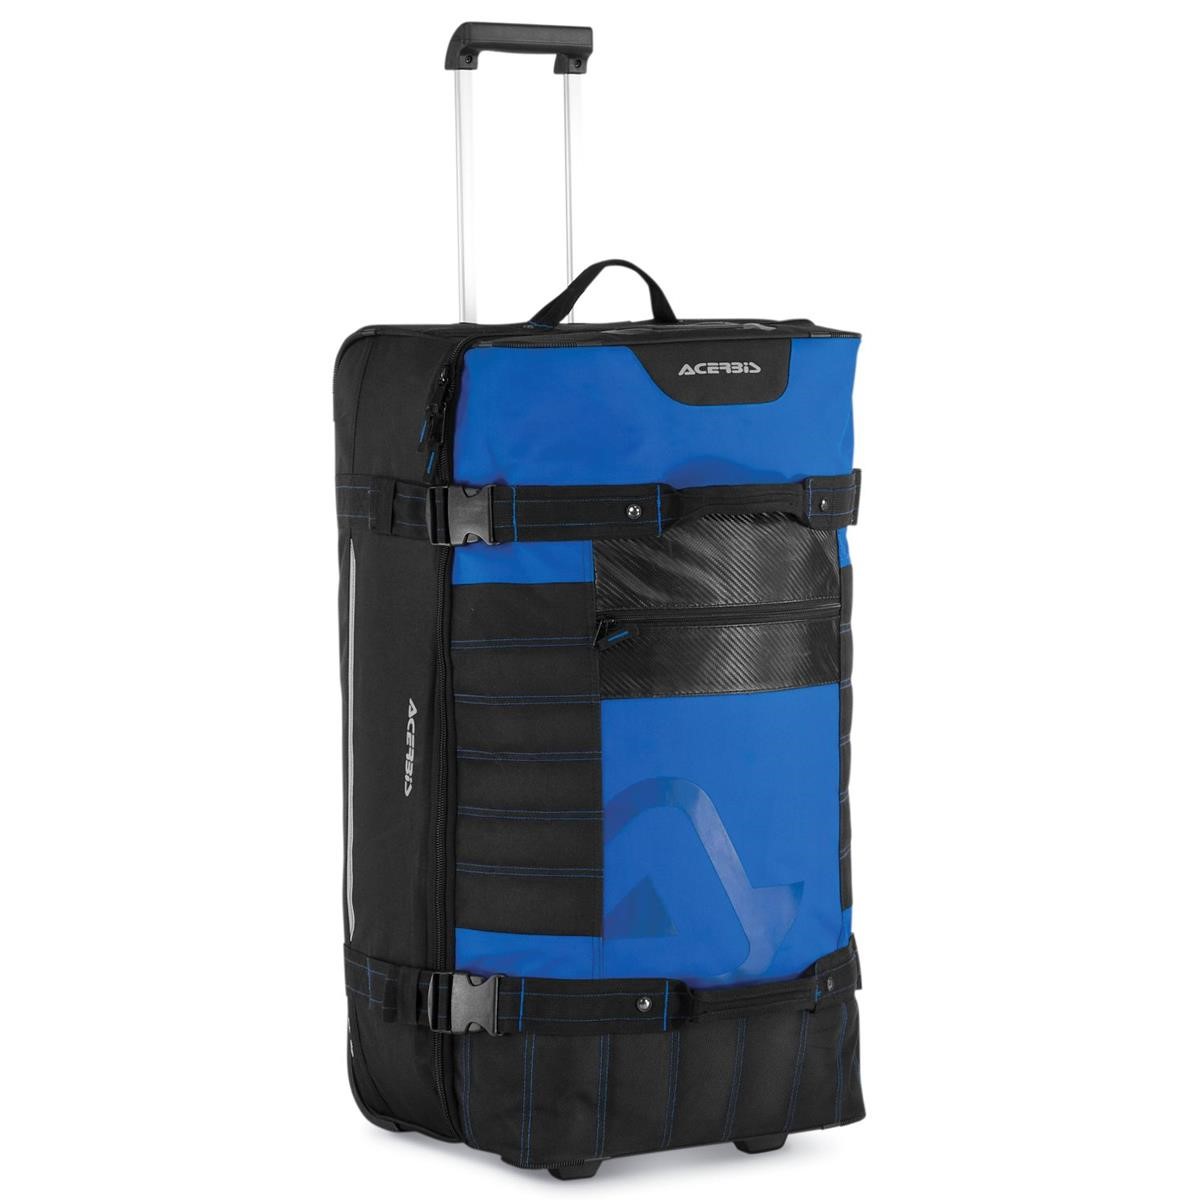 Acerbis Travel Bag X-Trip Blue/Black